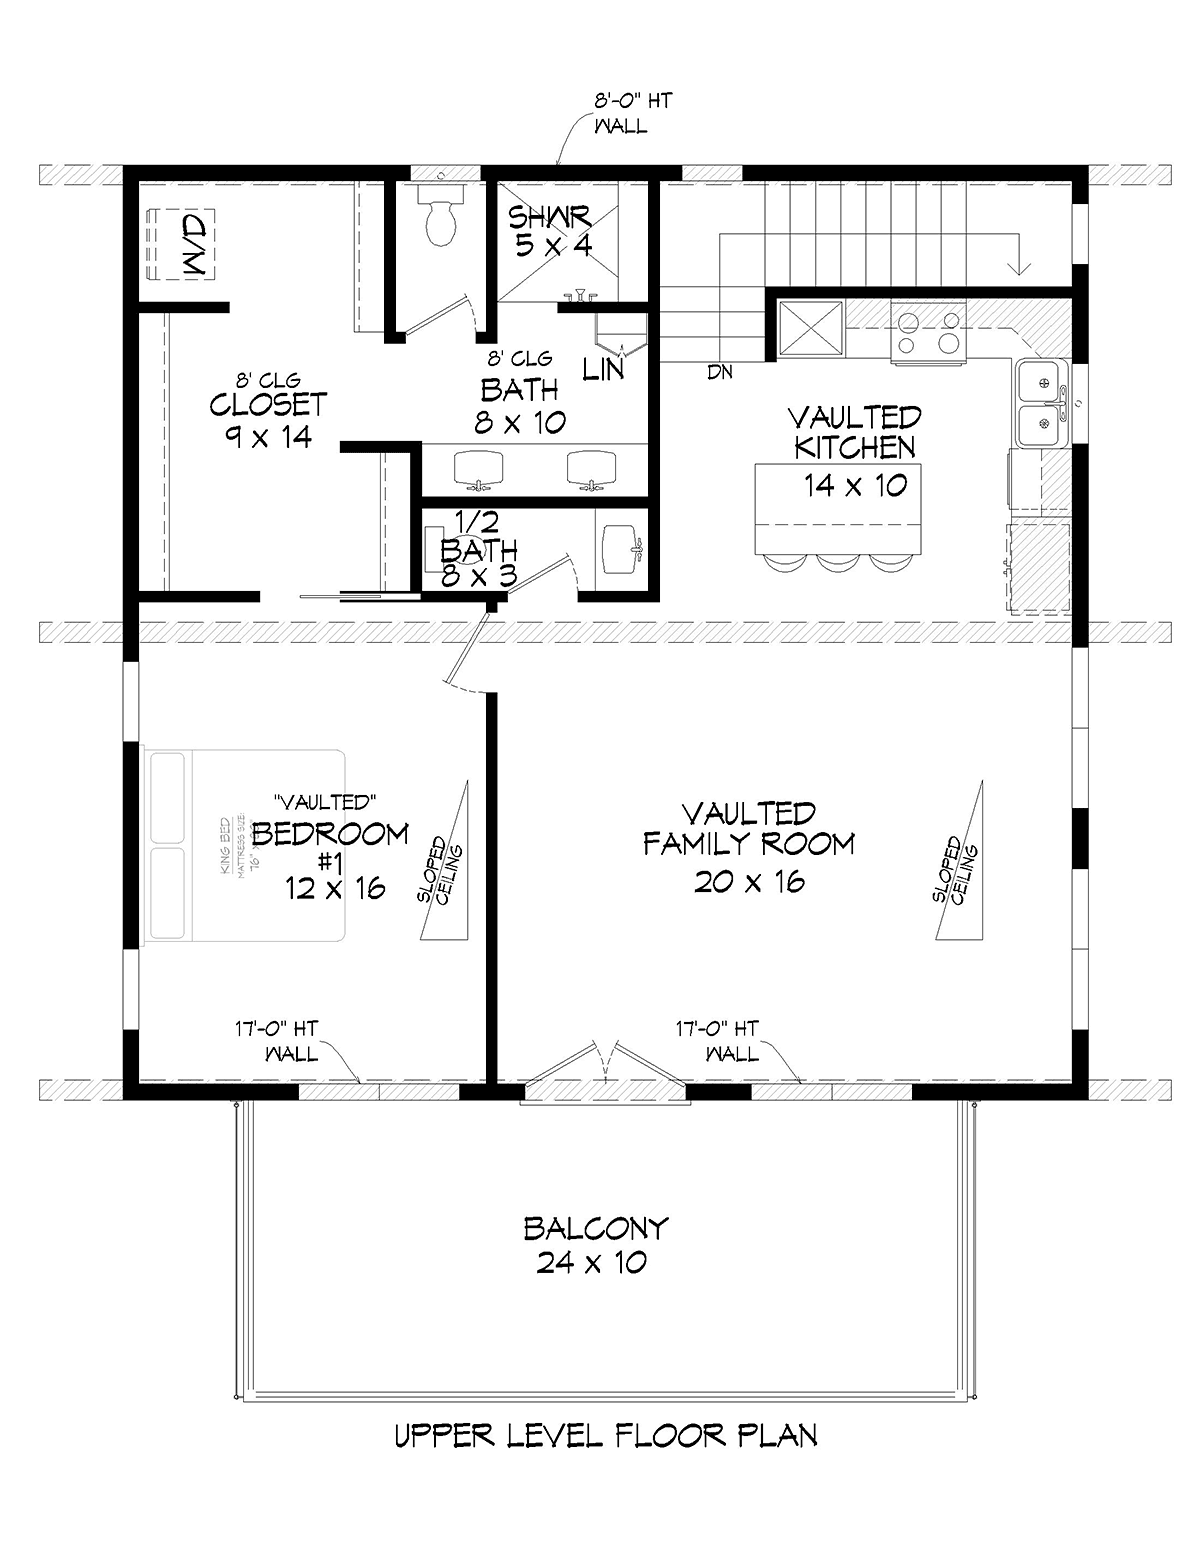 Coastal, Contemporary, Modern Garage-Living Plan 80976 with 2 Bed, 3 Bath, 2 Car Garage Level Two